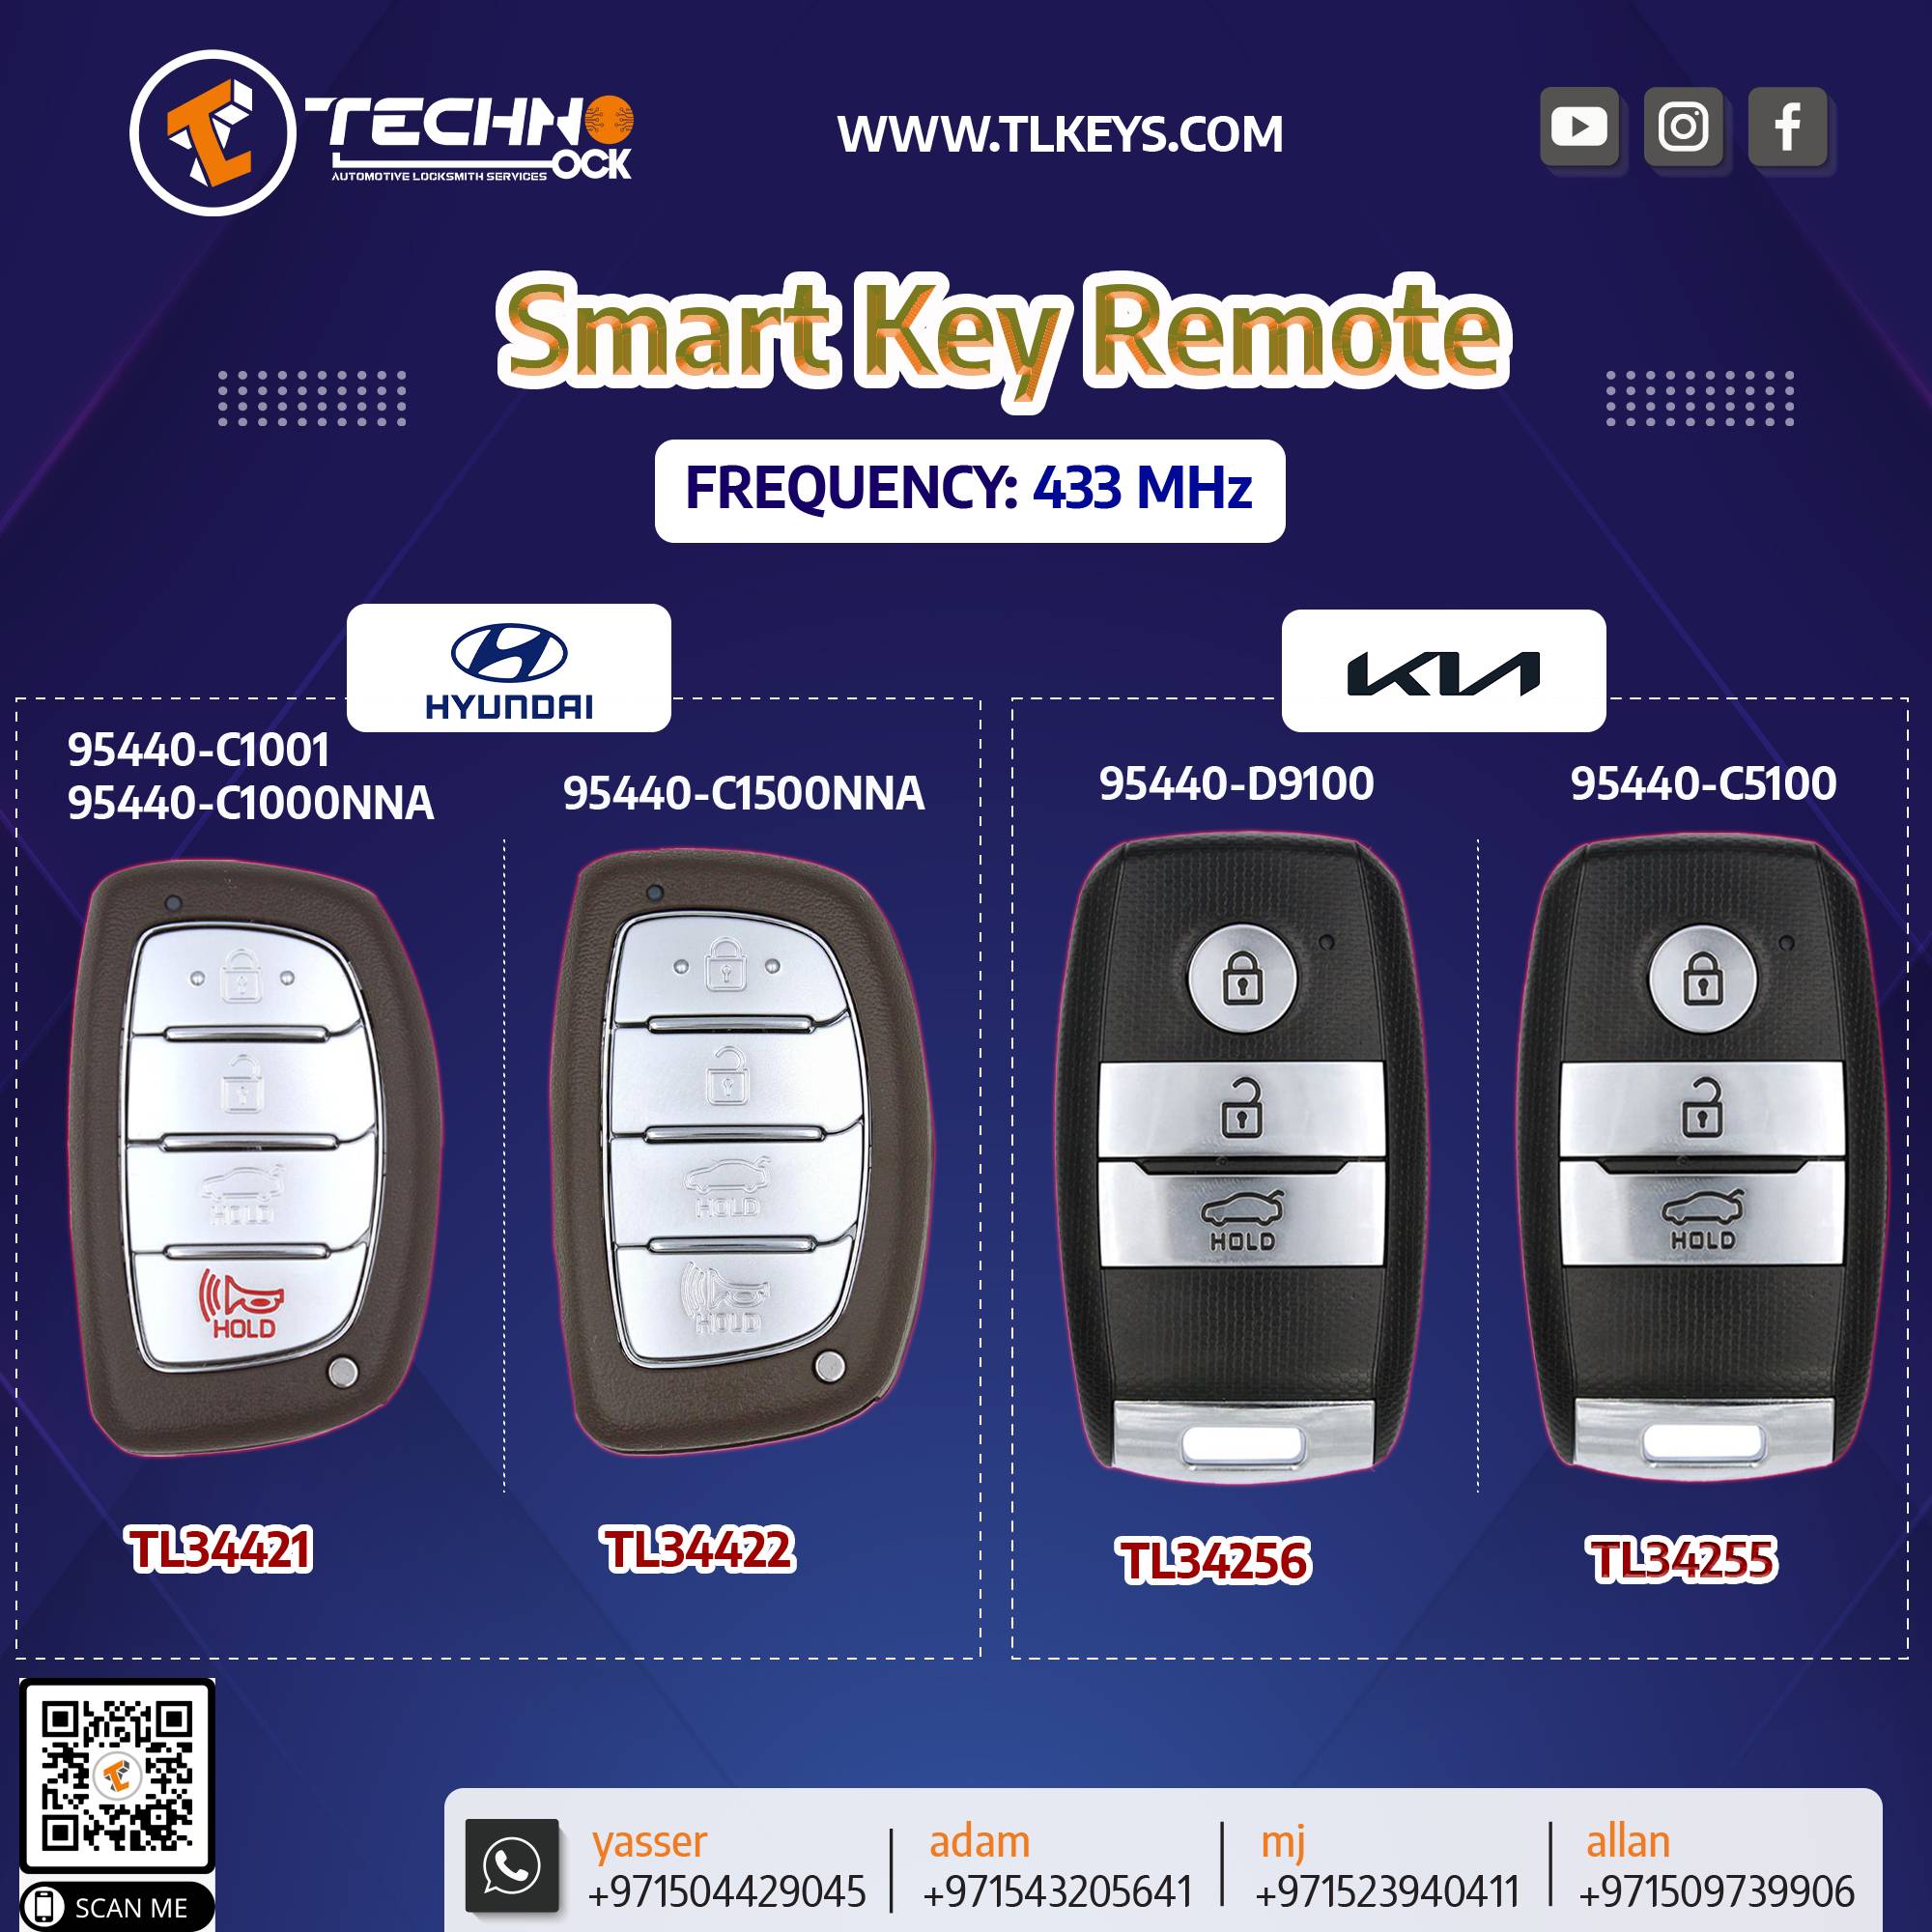  Key Remote Smart kia Hyundai FREQUENCY: 433 MHz